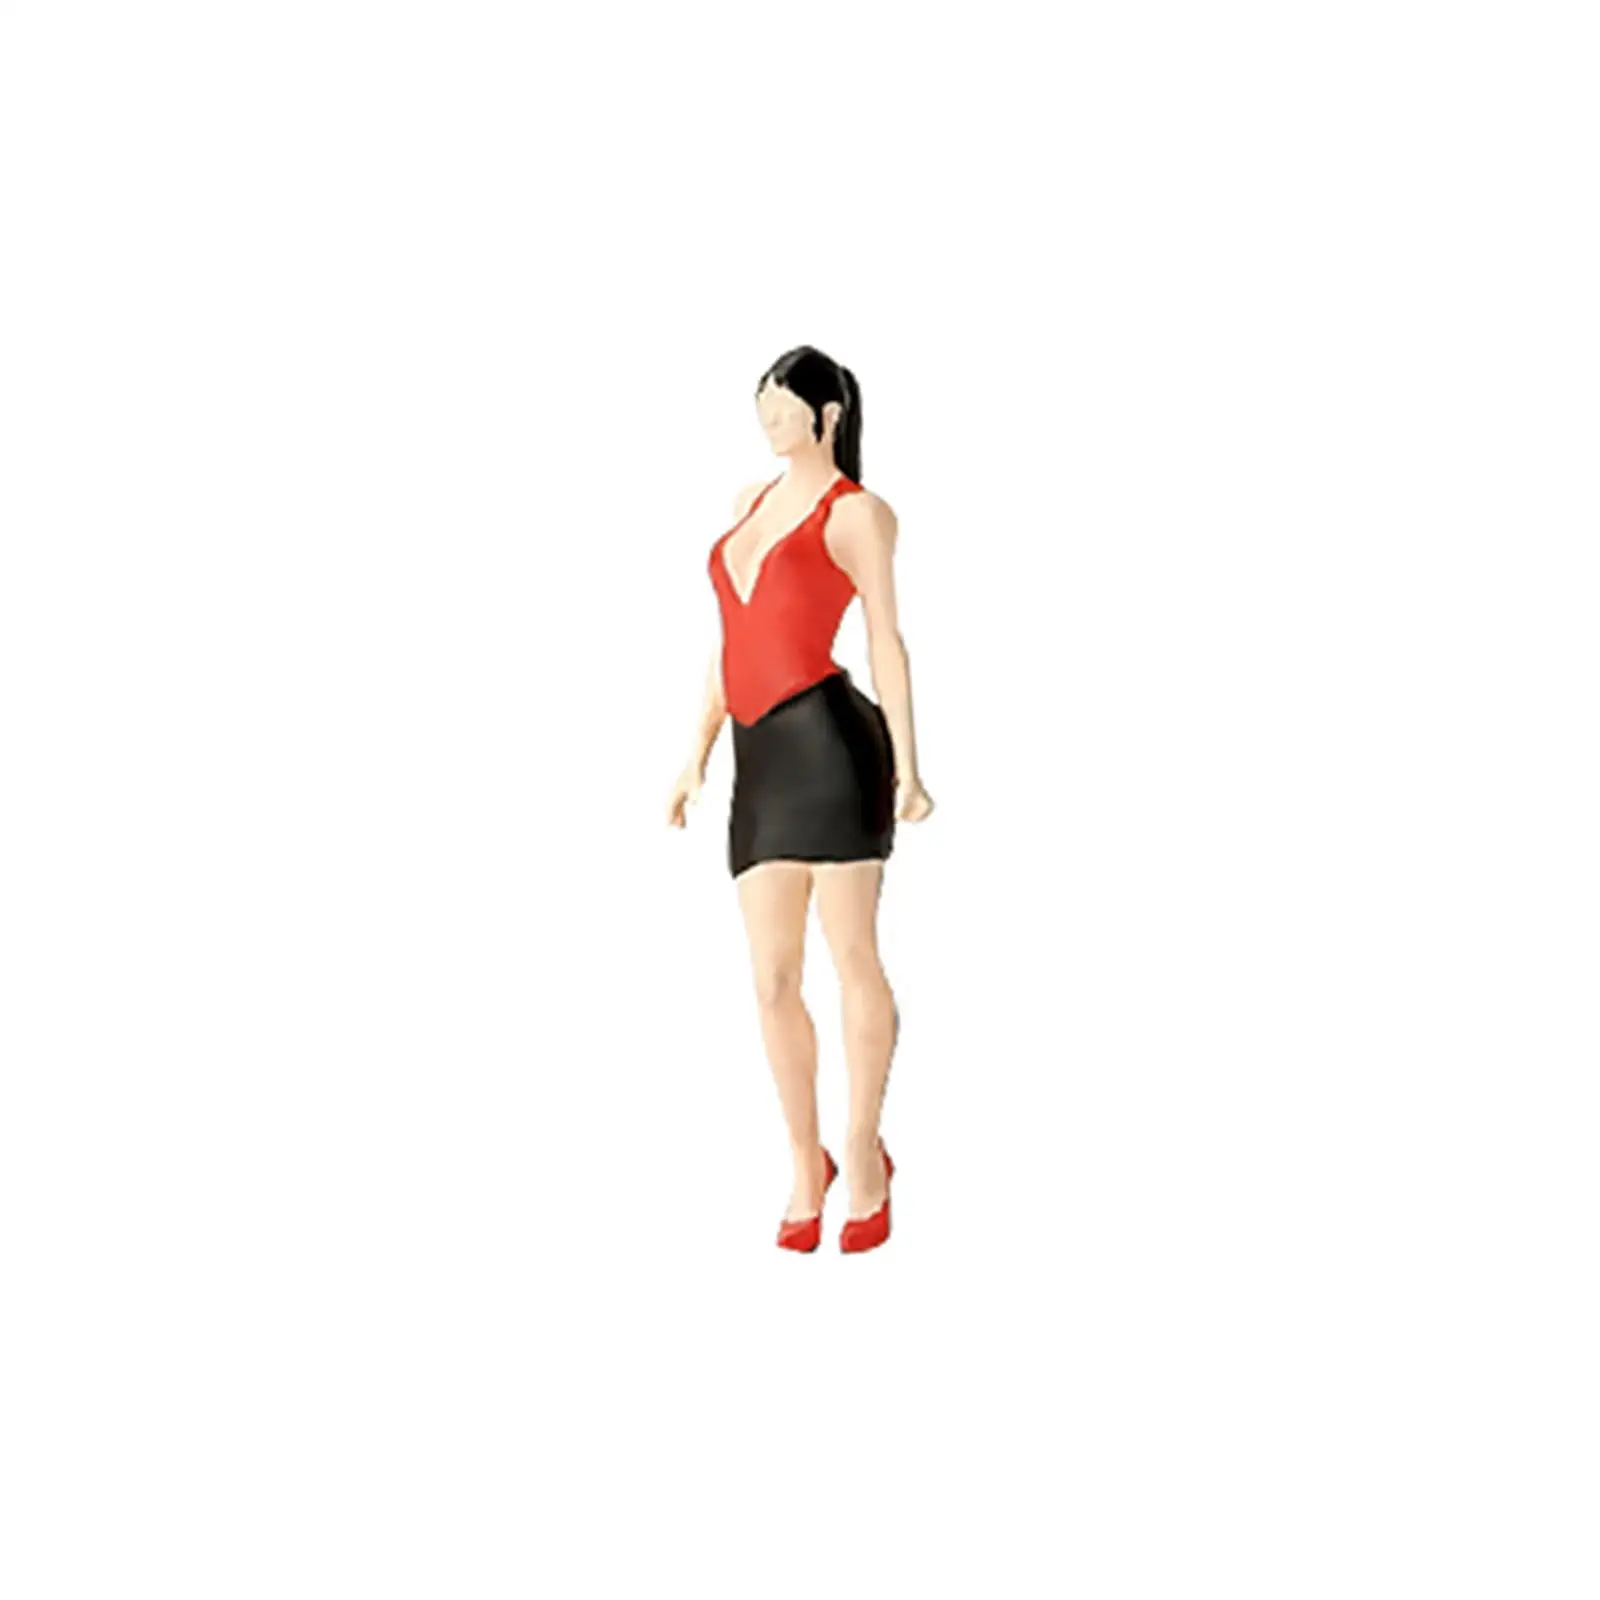 1/64 Female Models Figurine Accessory Miniature Resin 1:64 People Figures